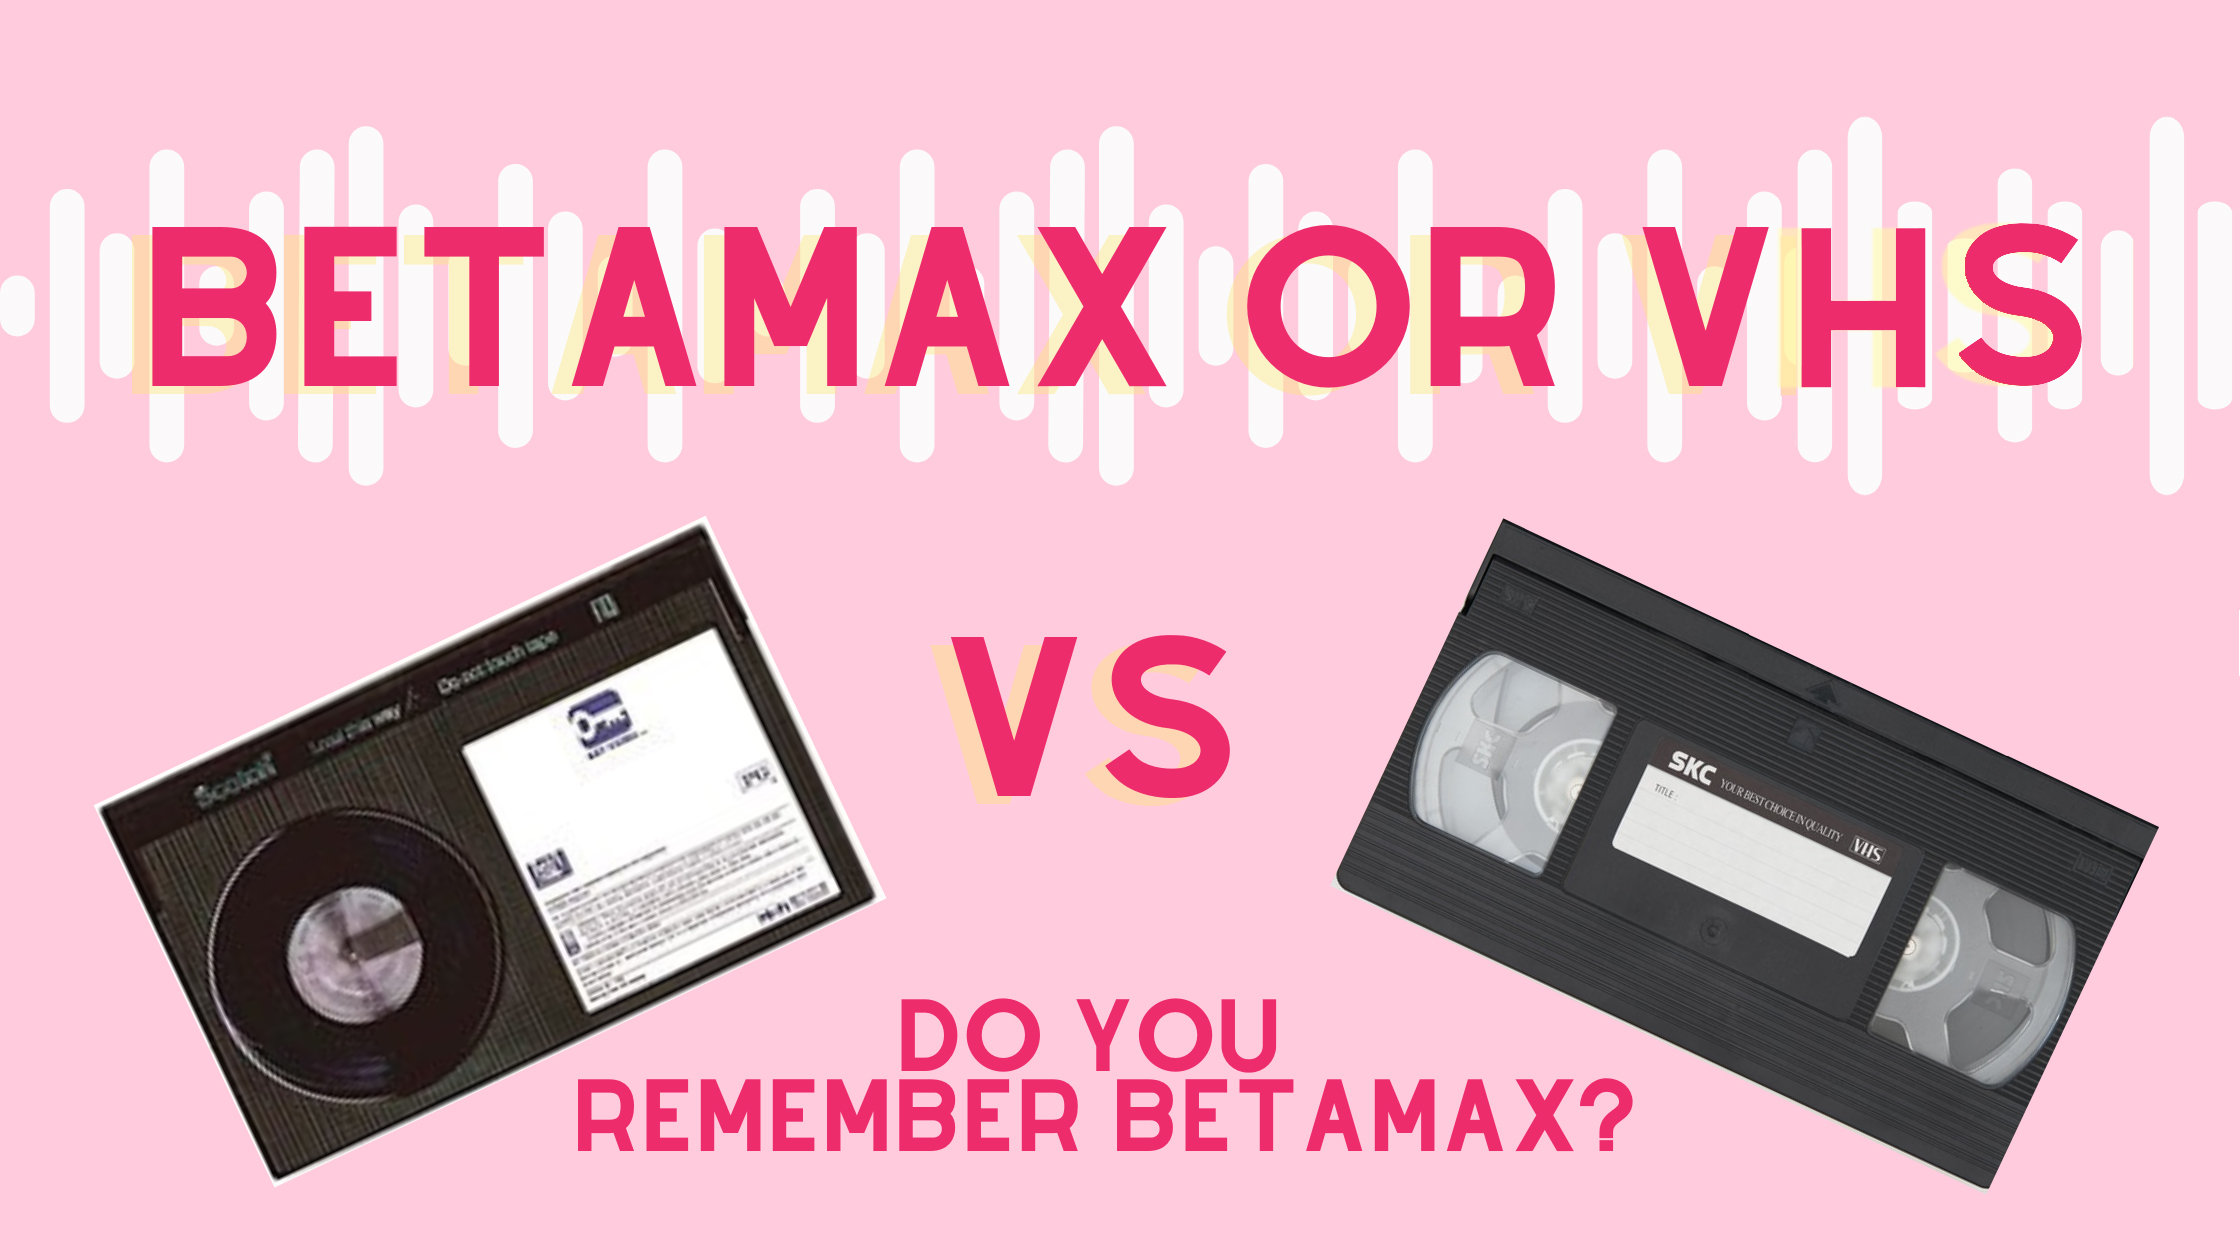 Betamax vs. VHS